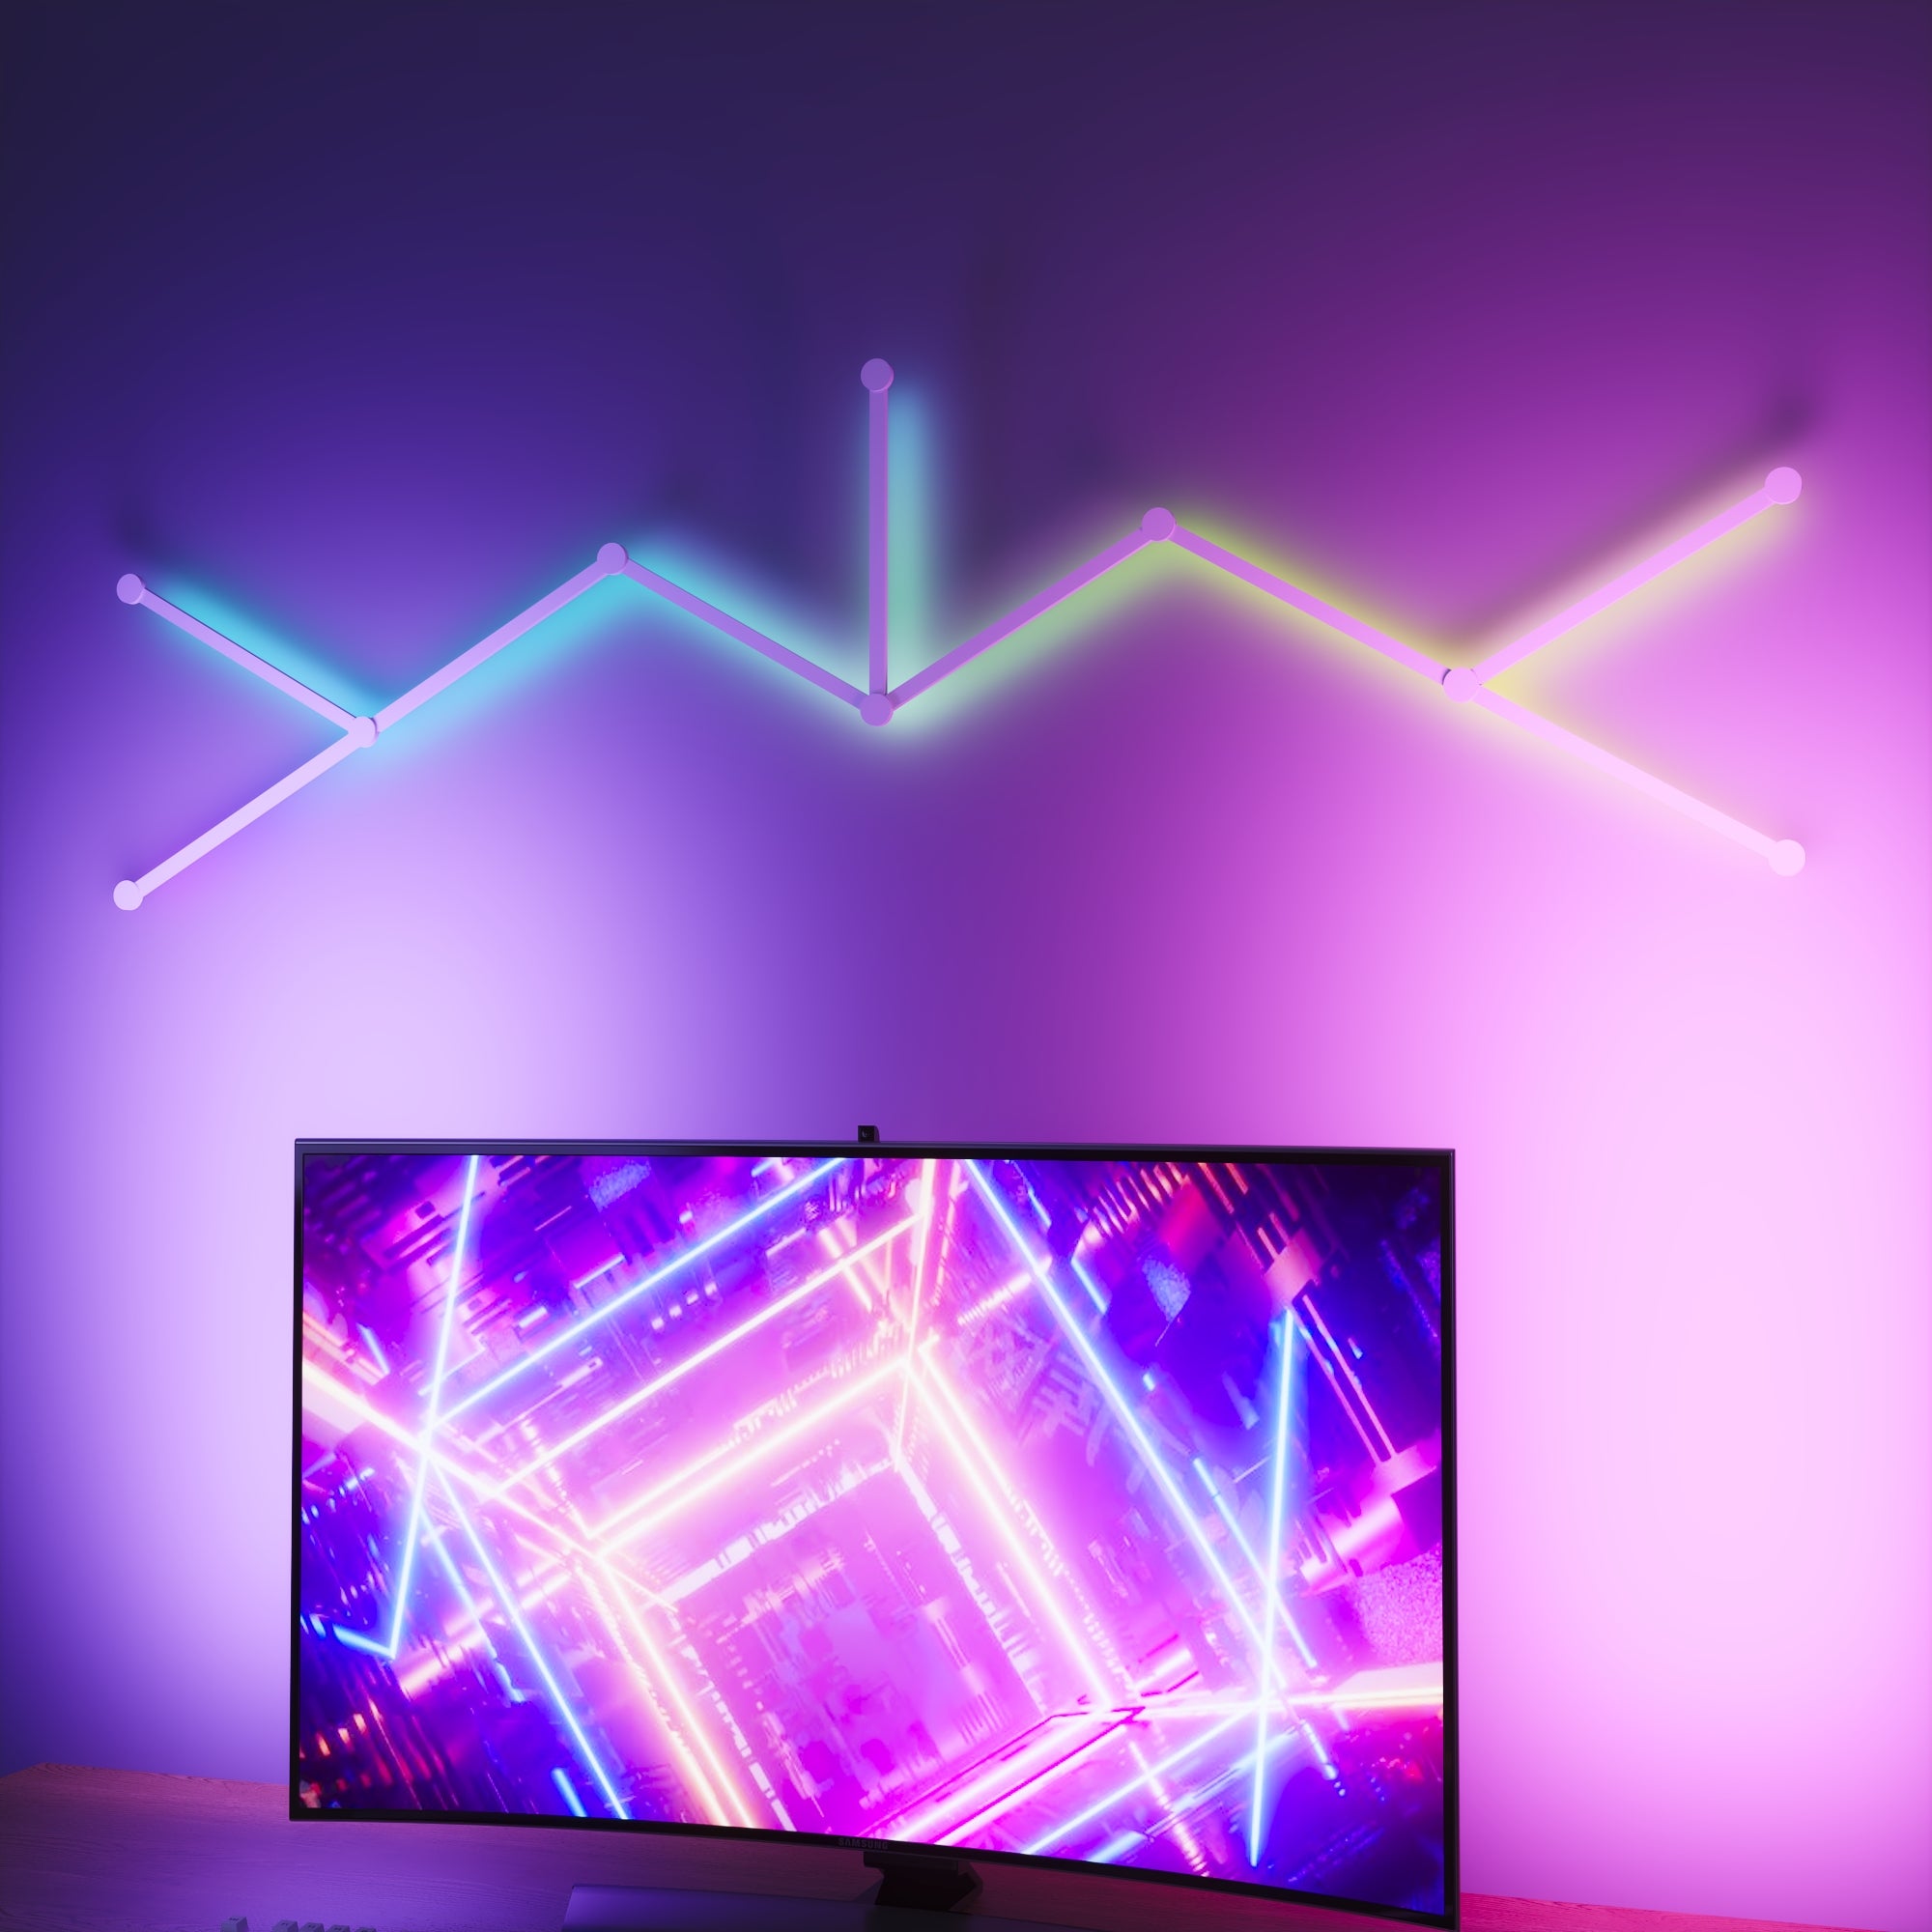 LUMIMAN Glide Wall Light Smart Music Sync RGB Color changing